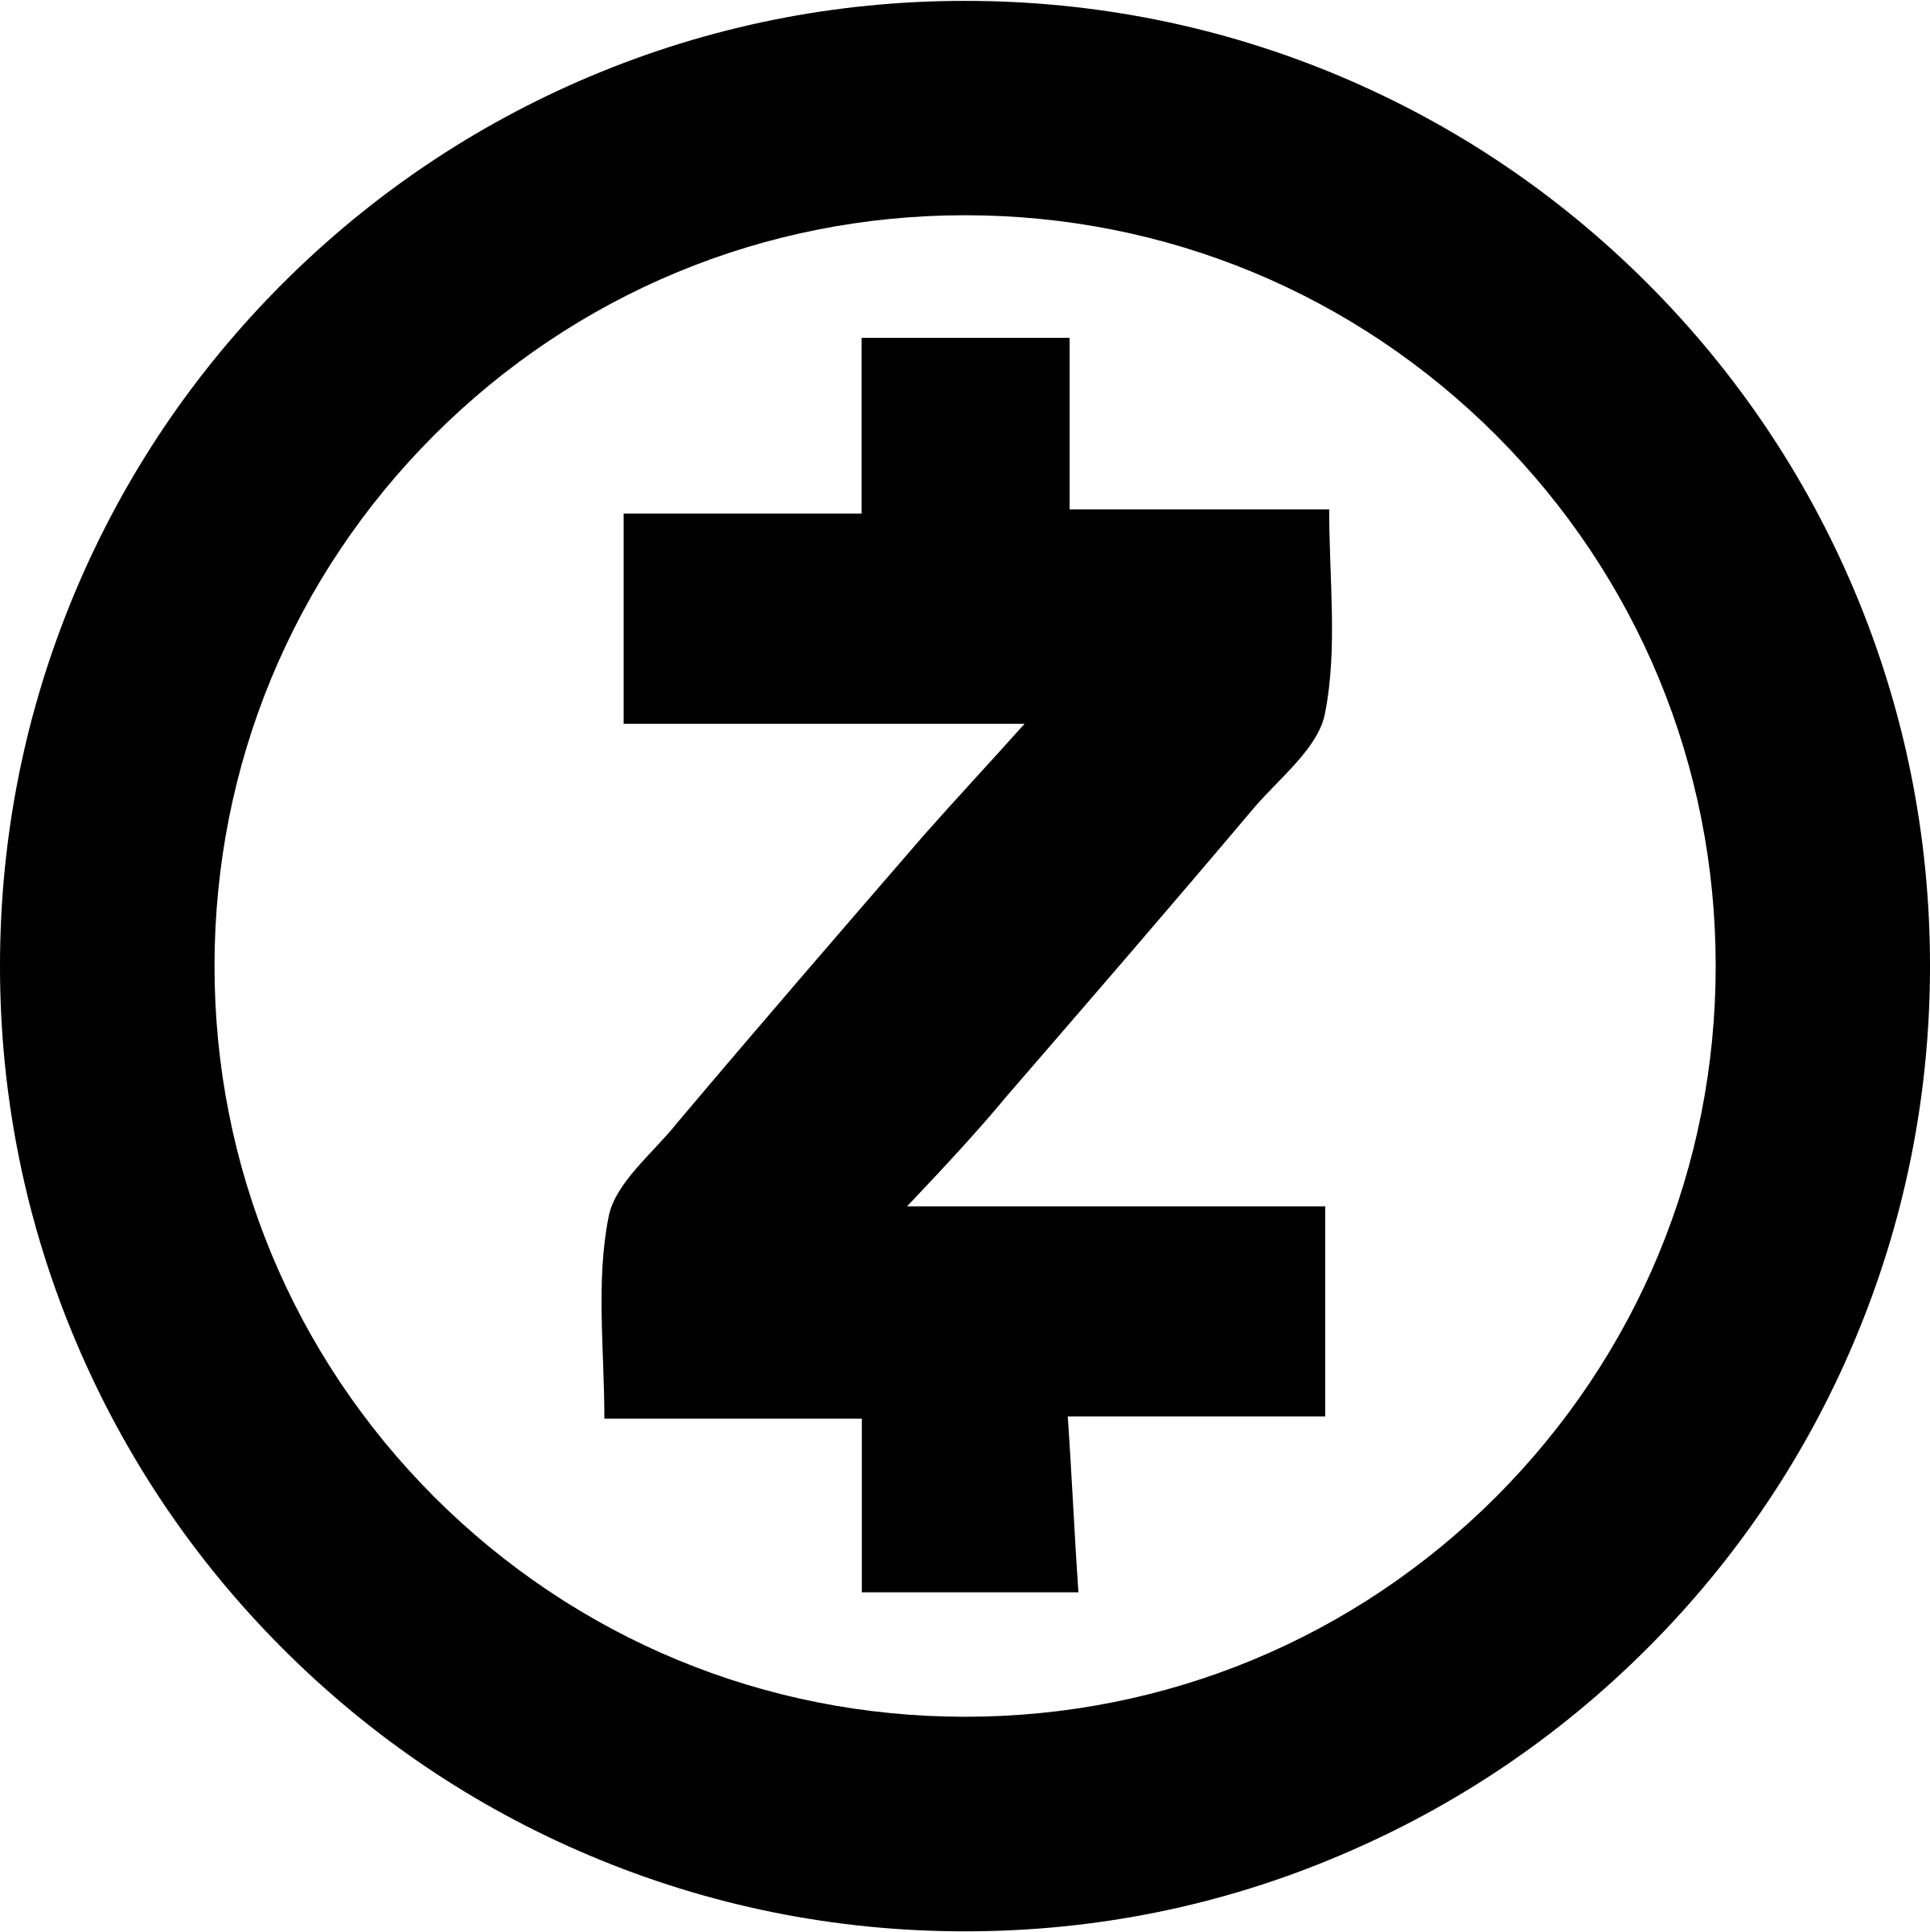 Zcash Logo - Zcash (ZEC) Logo PNG Transparent & SVG Vector - Freebie Supply